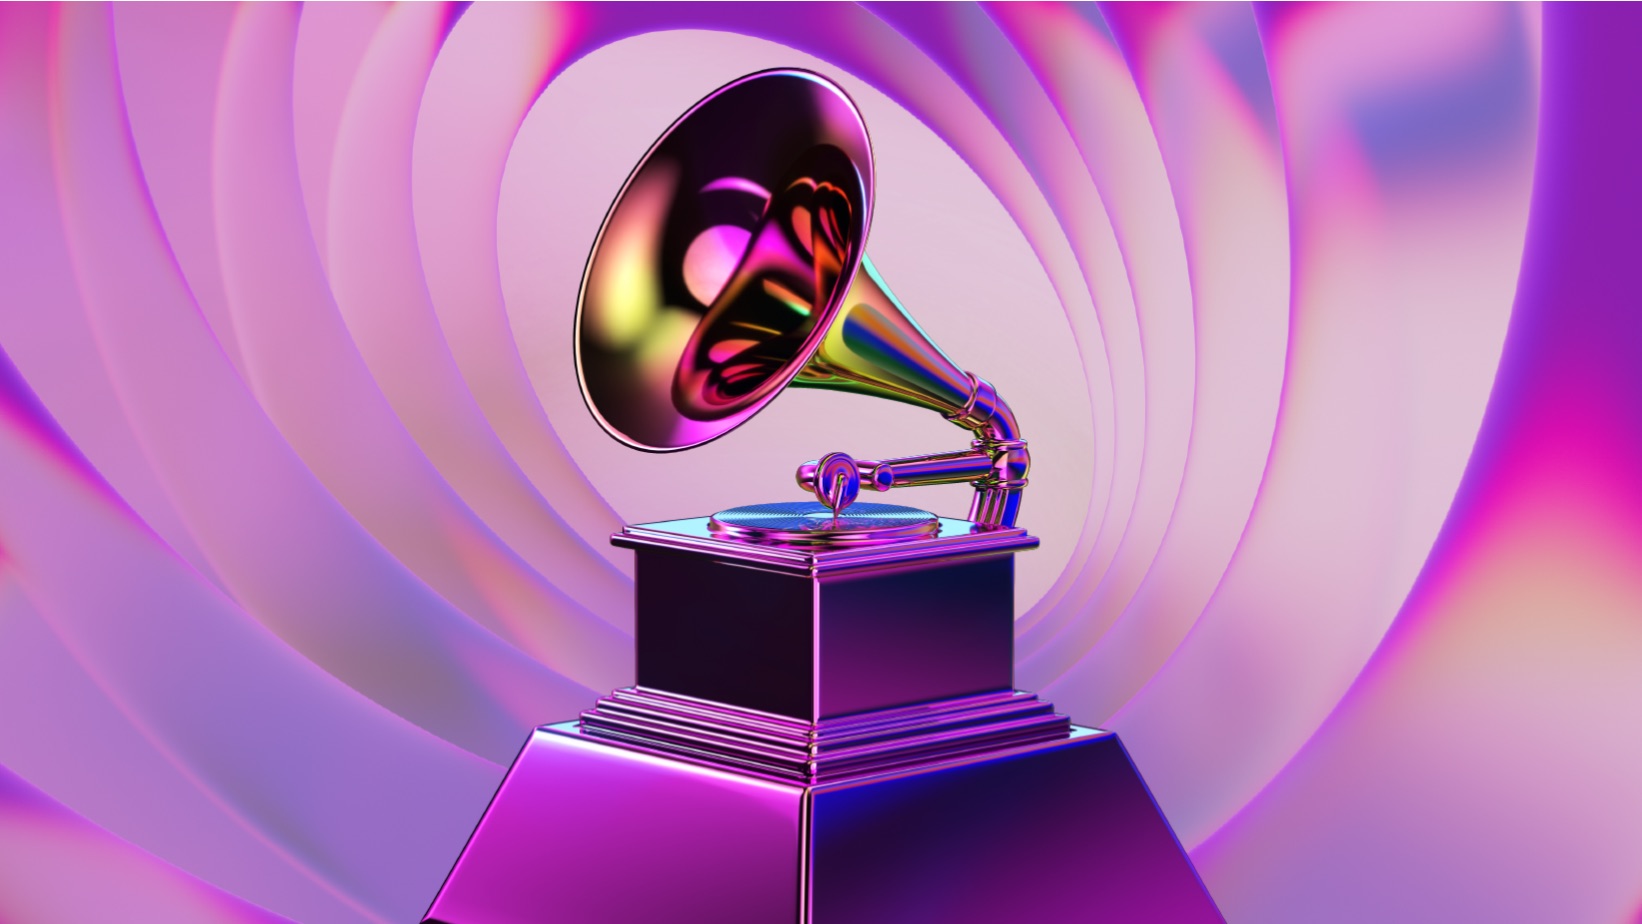 Grammy video game award